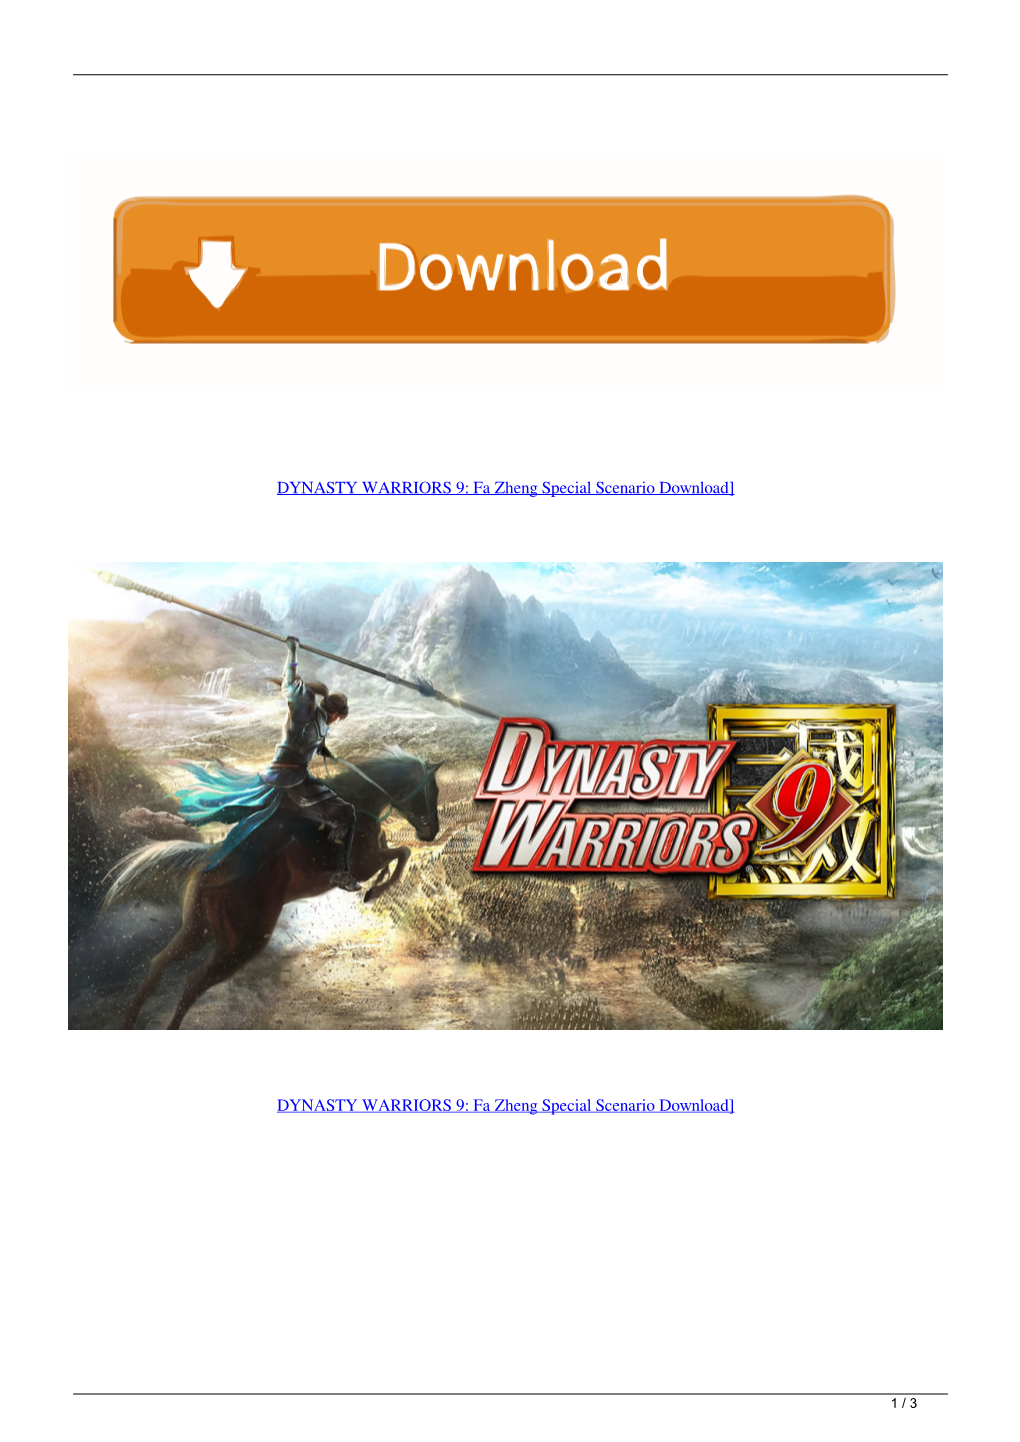 DYNASTY WARRIORS 9 Fa Zheng Special Scenario Download